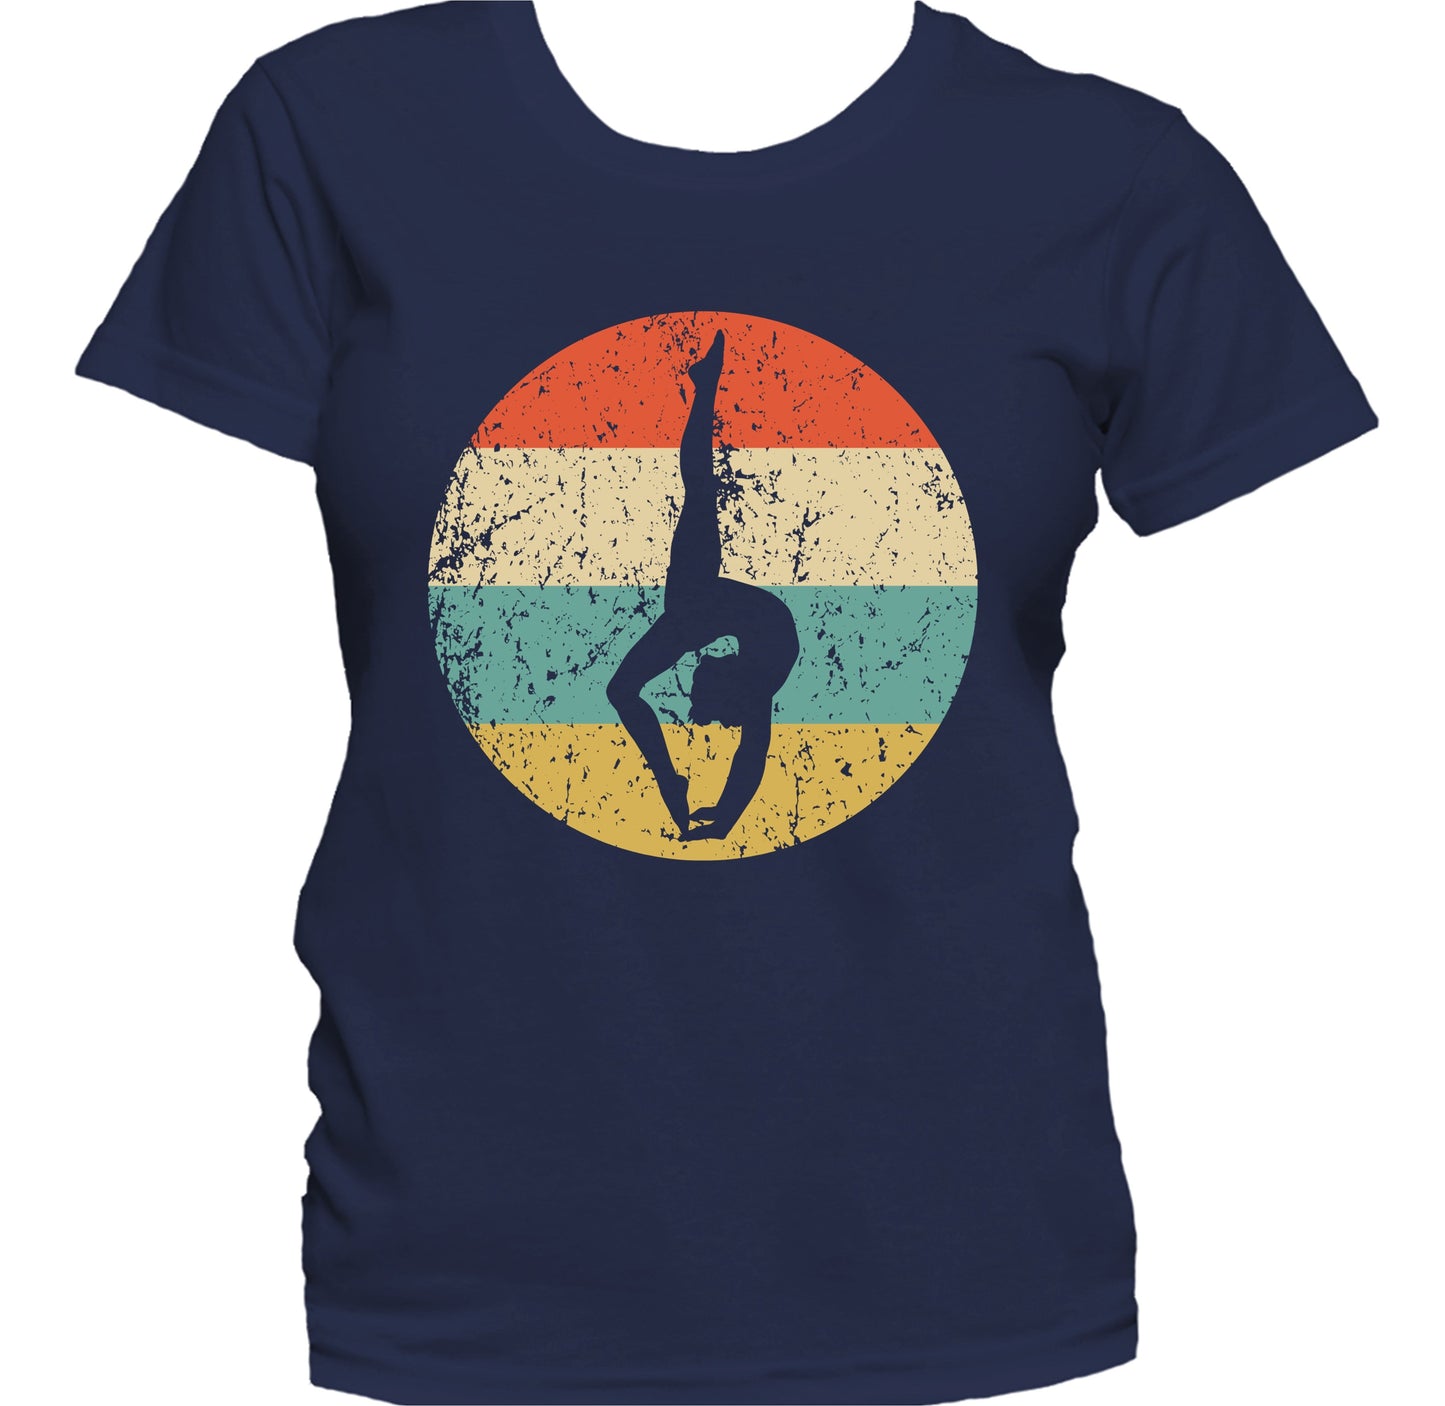 Gymnastics Retro Gymnast Icon Women's T-Shirt